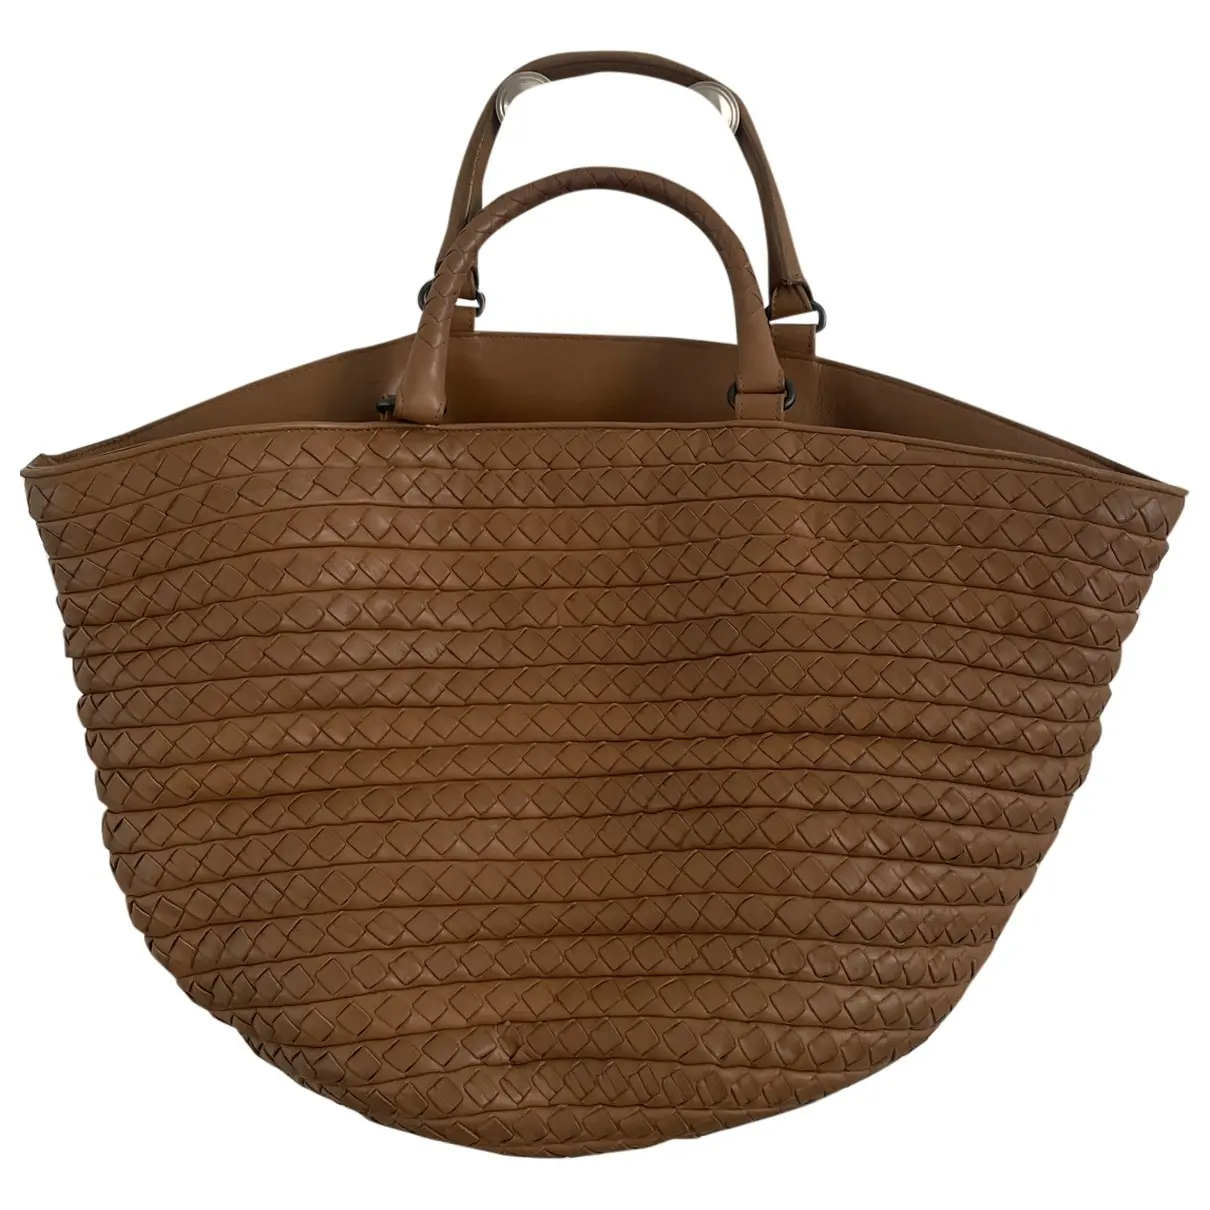 Cabat leather handbag